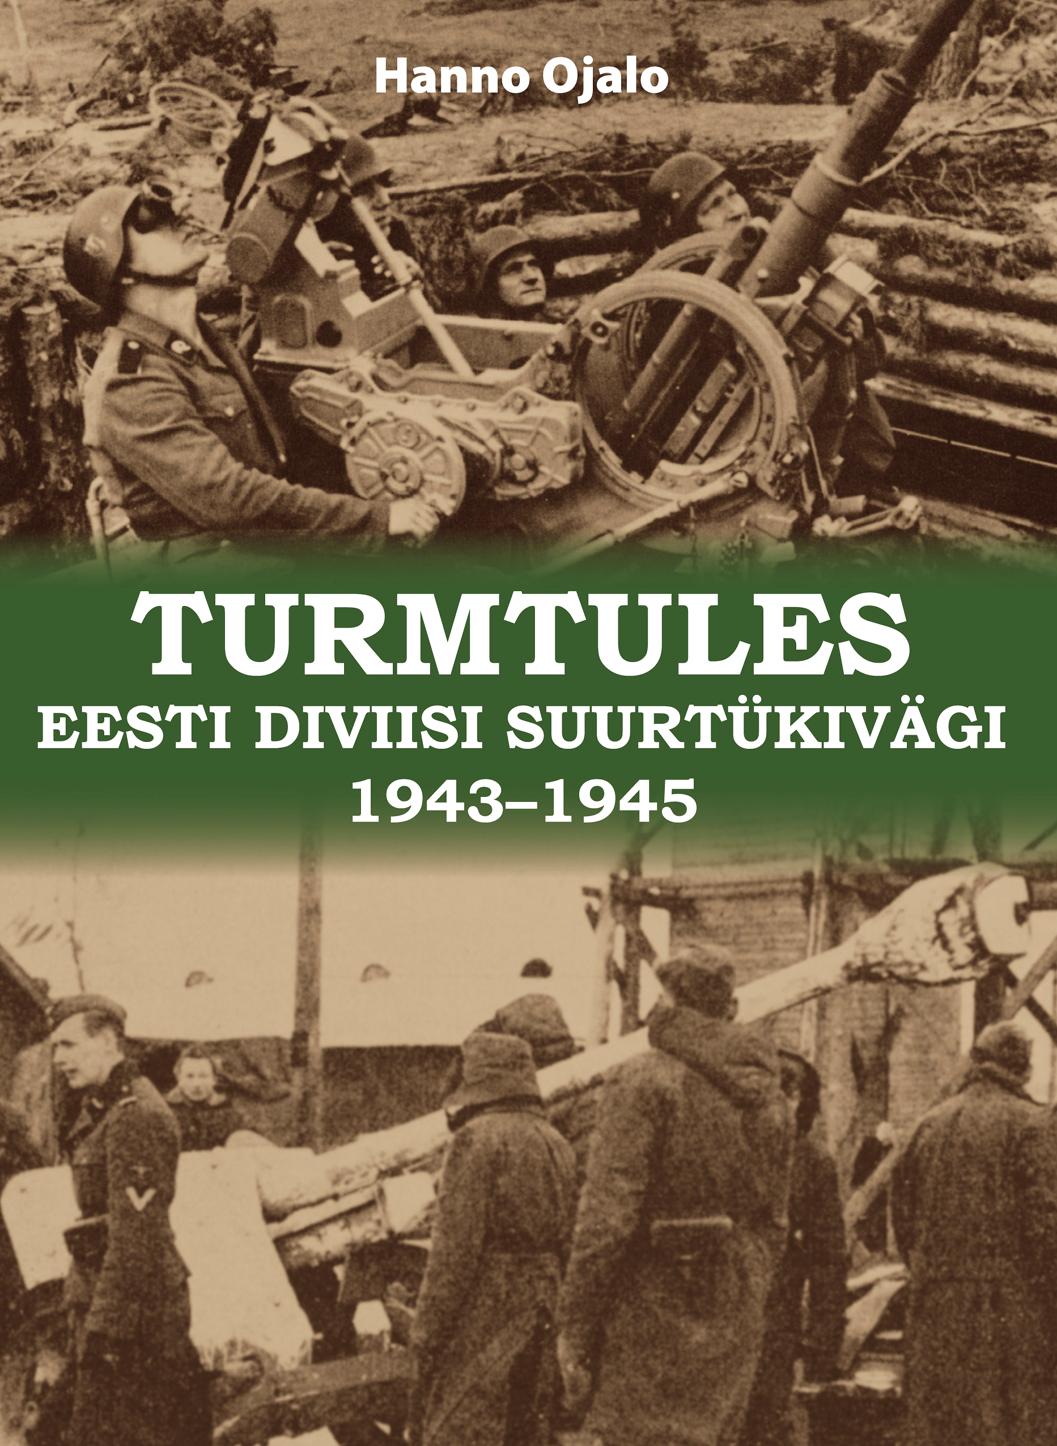 TURMTULES. EESTI DIVIISI SUURTÜKIVÄGI 1943-1945